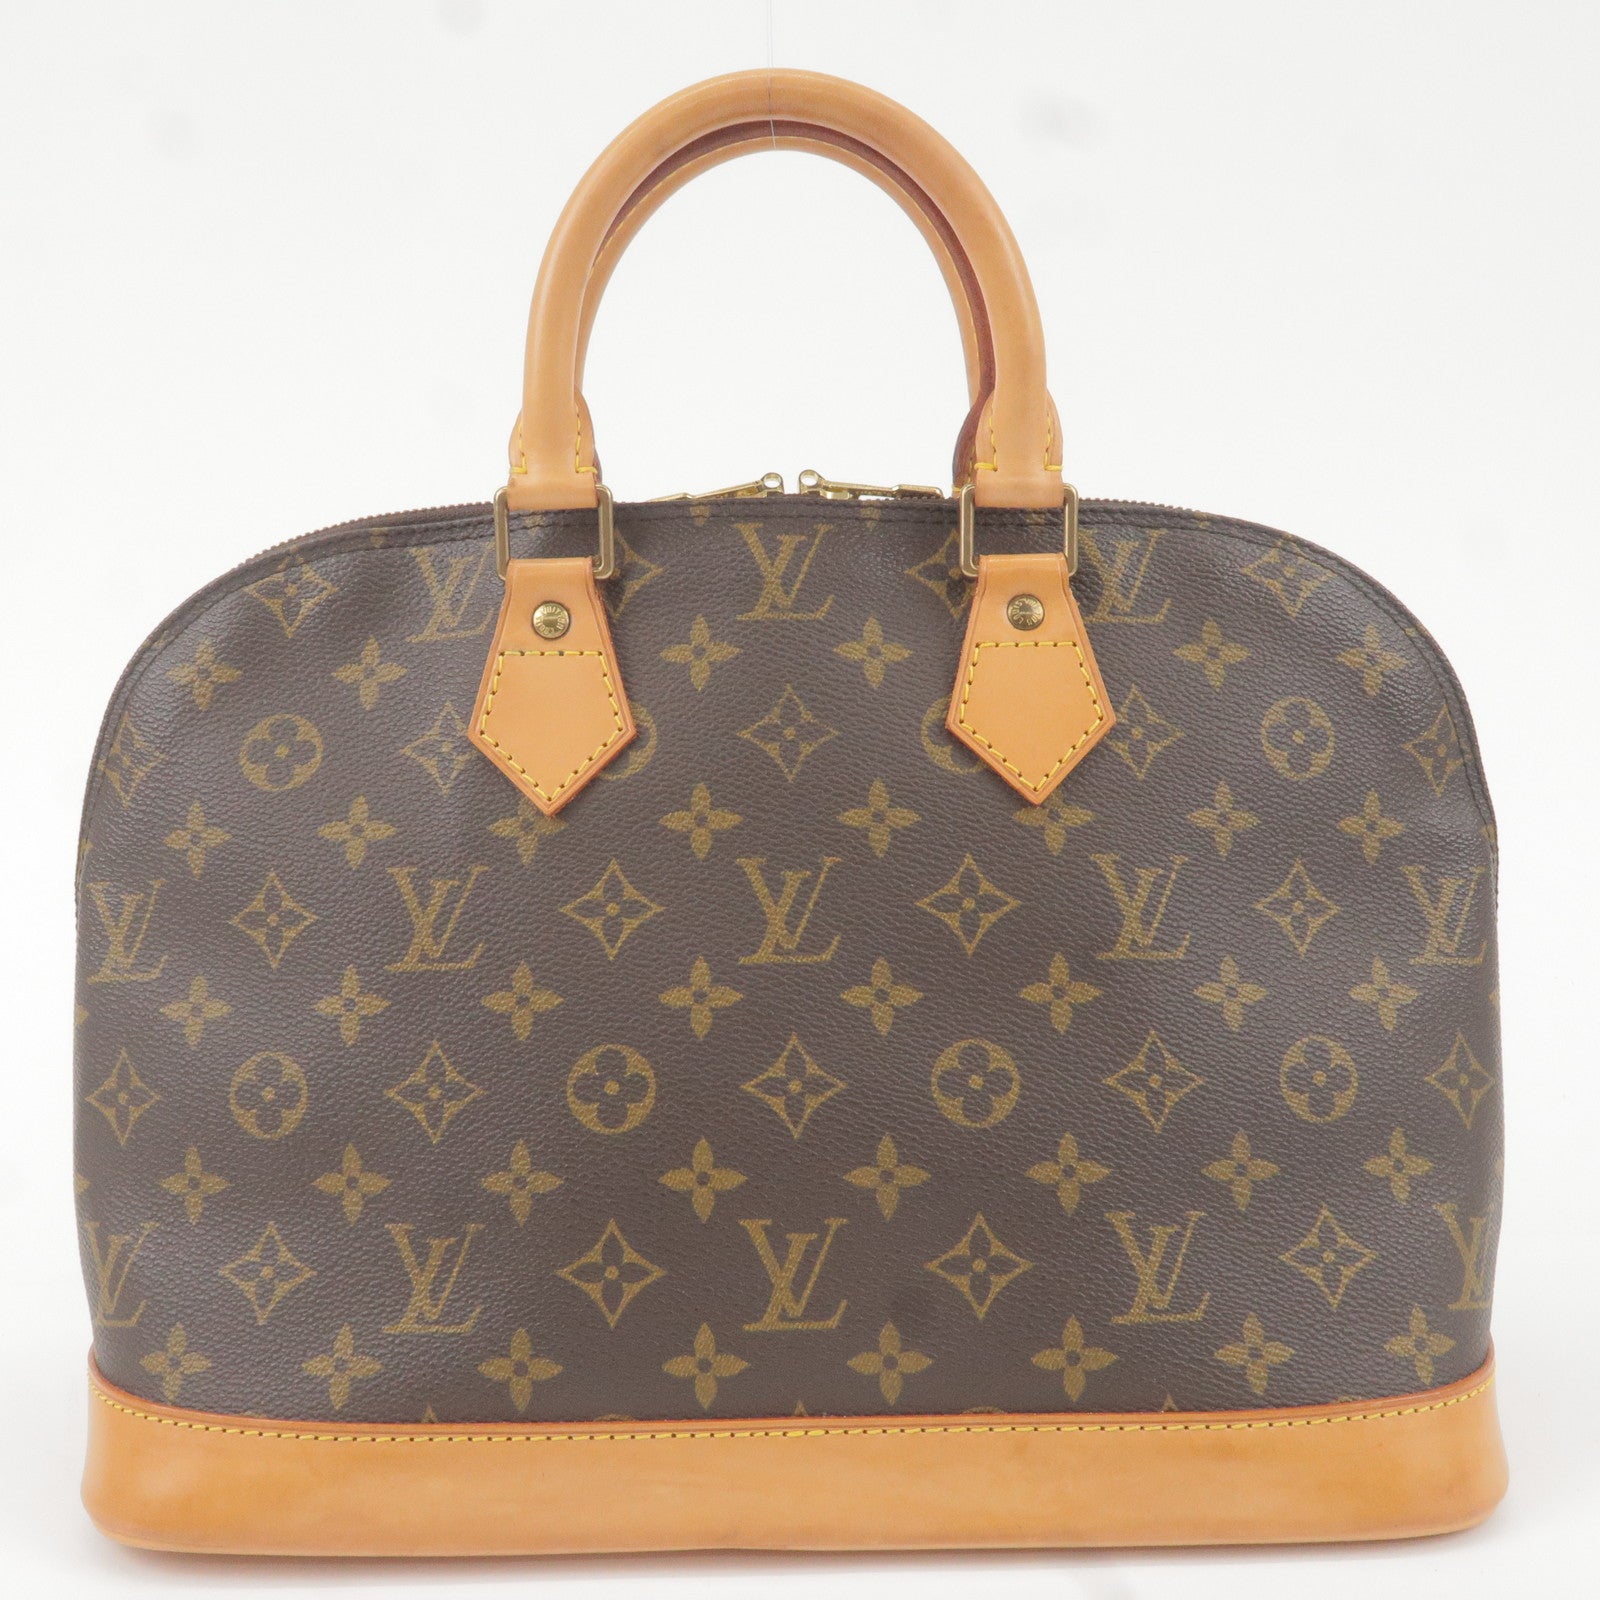 Louis Vuitton Vernis Empreinte Alma PM in Purple Handbag - Authentic Pre-Owned Designer Handbags